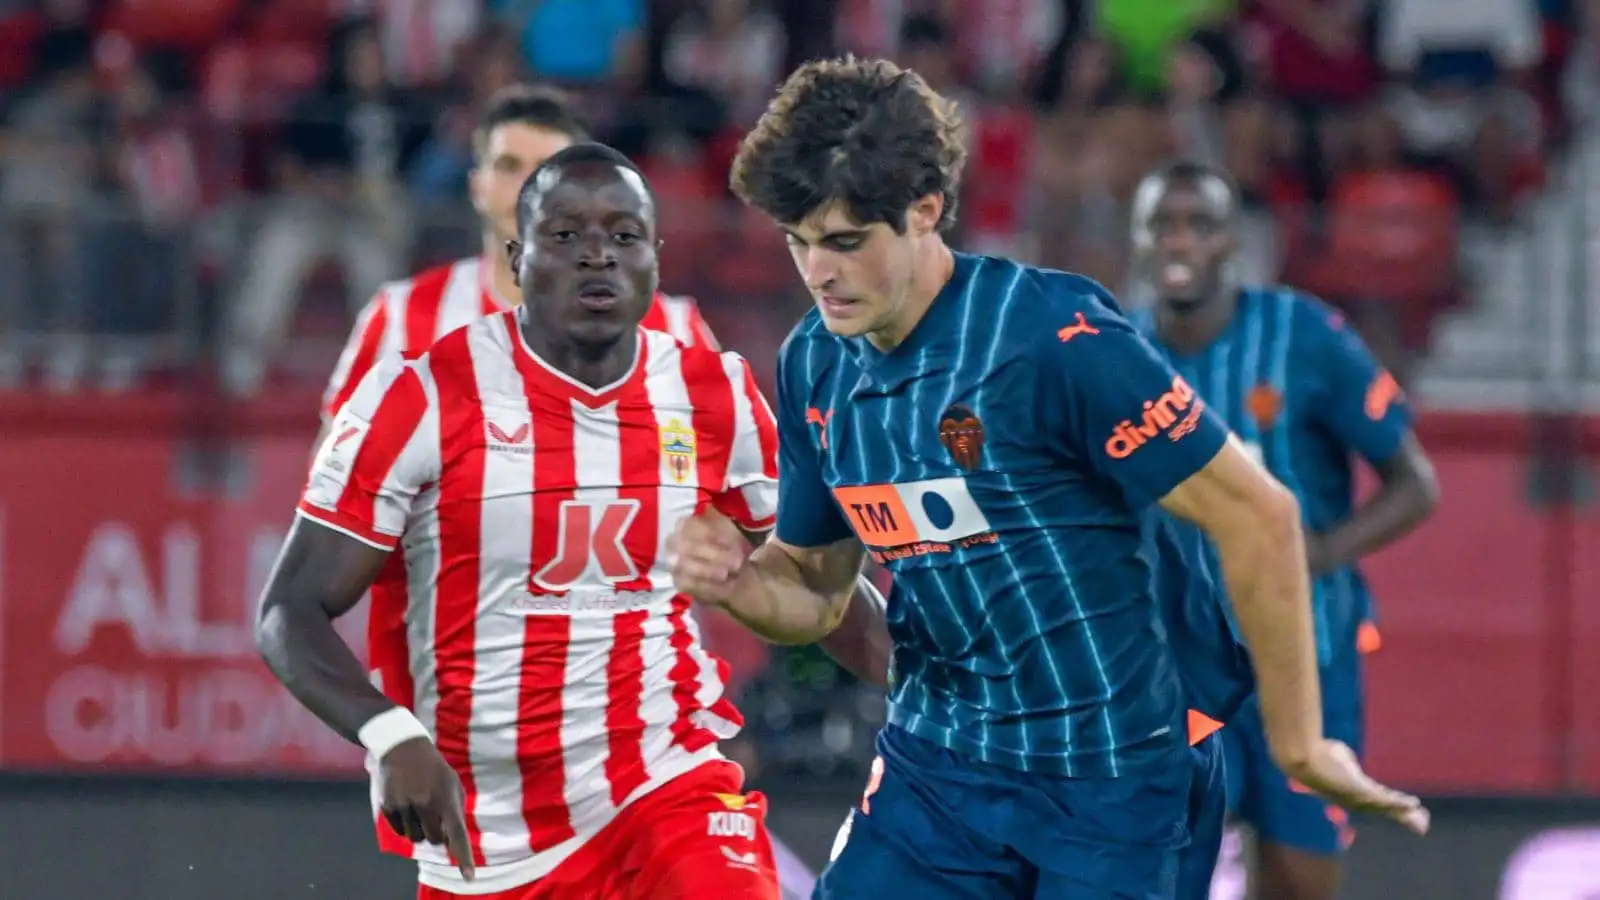 Almeria's Dion Lopy chasing Valencia midfielder Javi Guerra